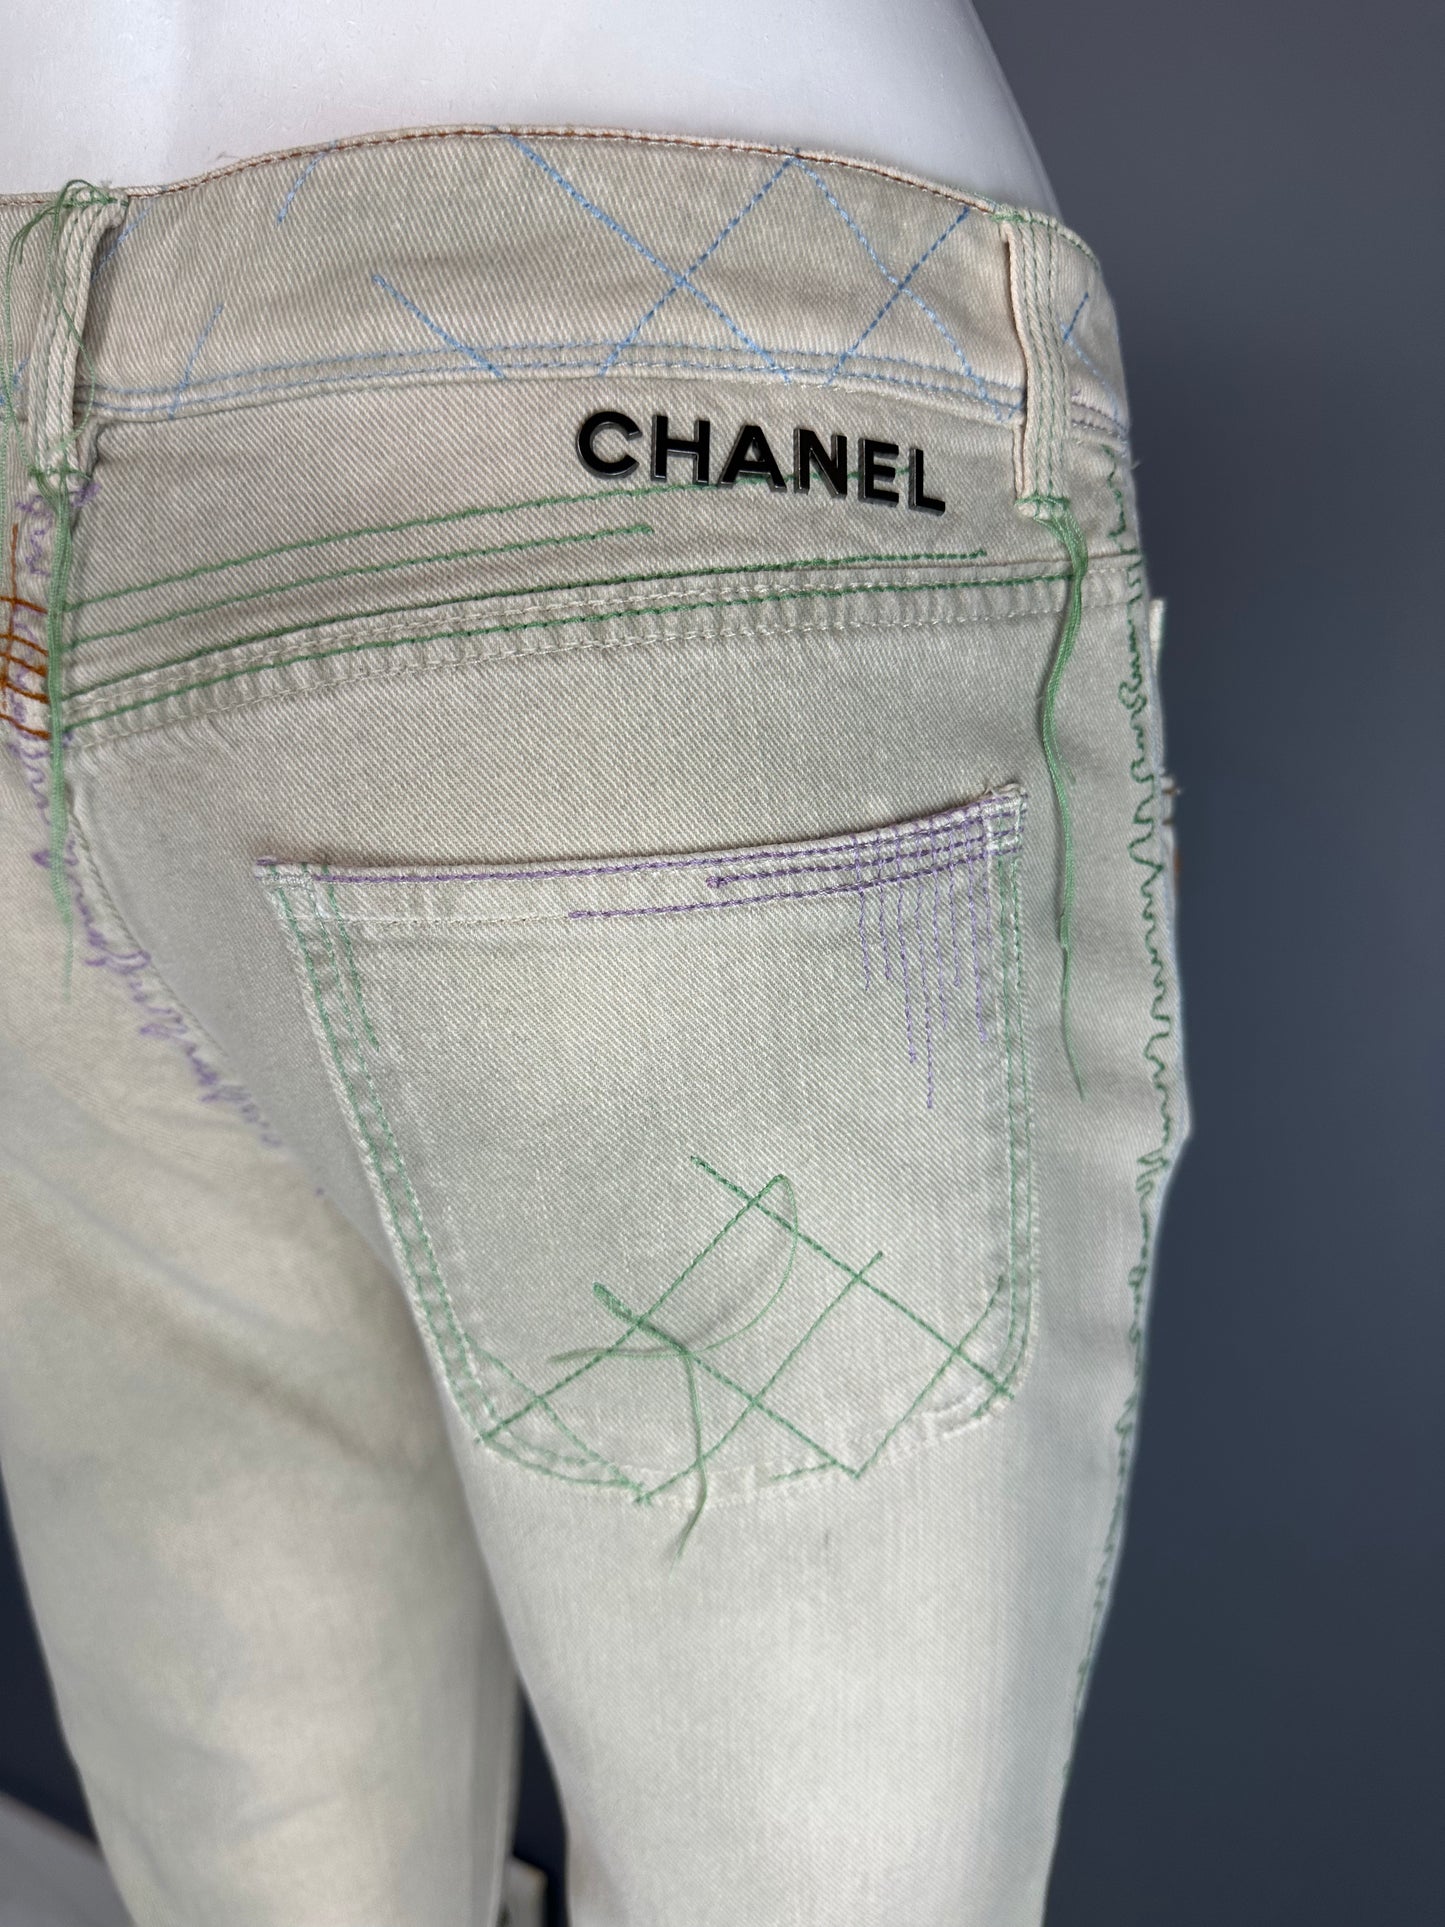 CHANEL - Jeans grey logo size 38 FR